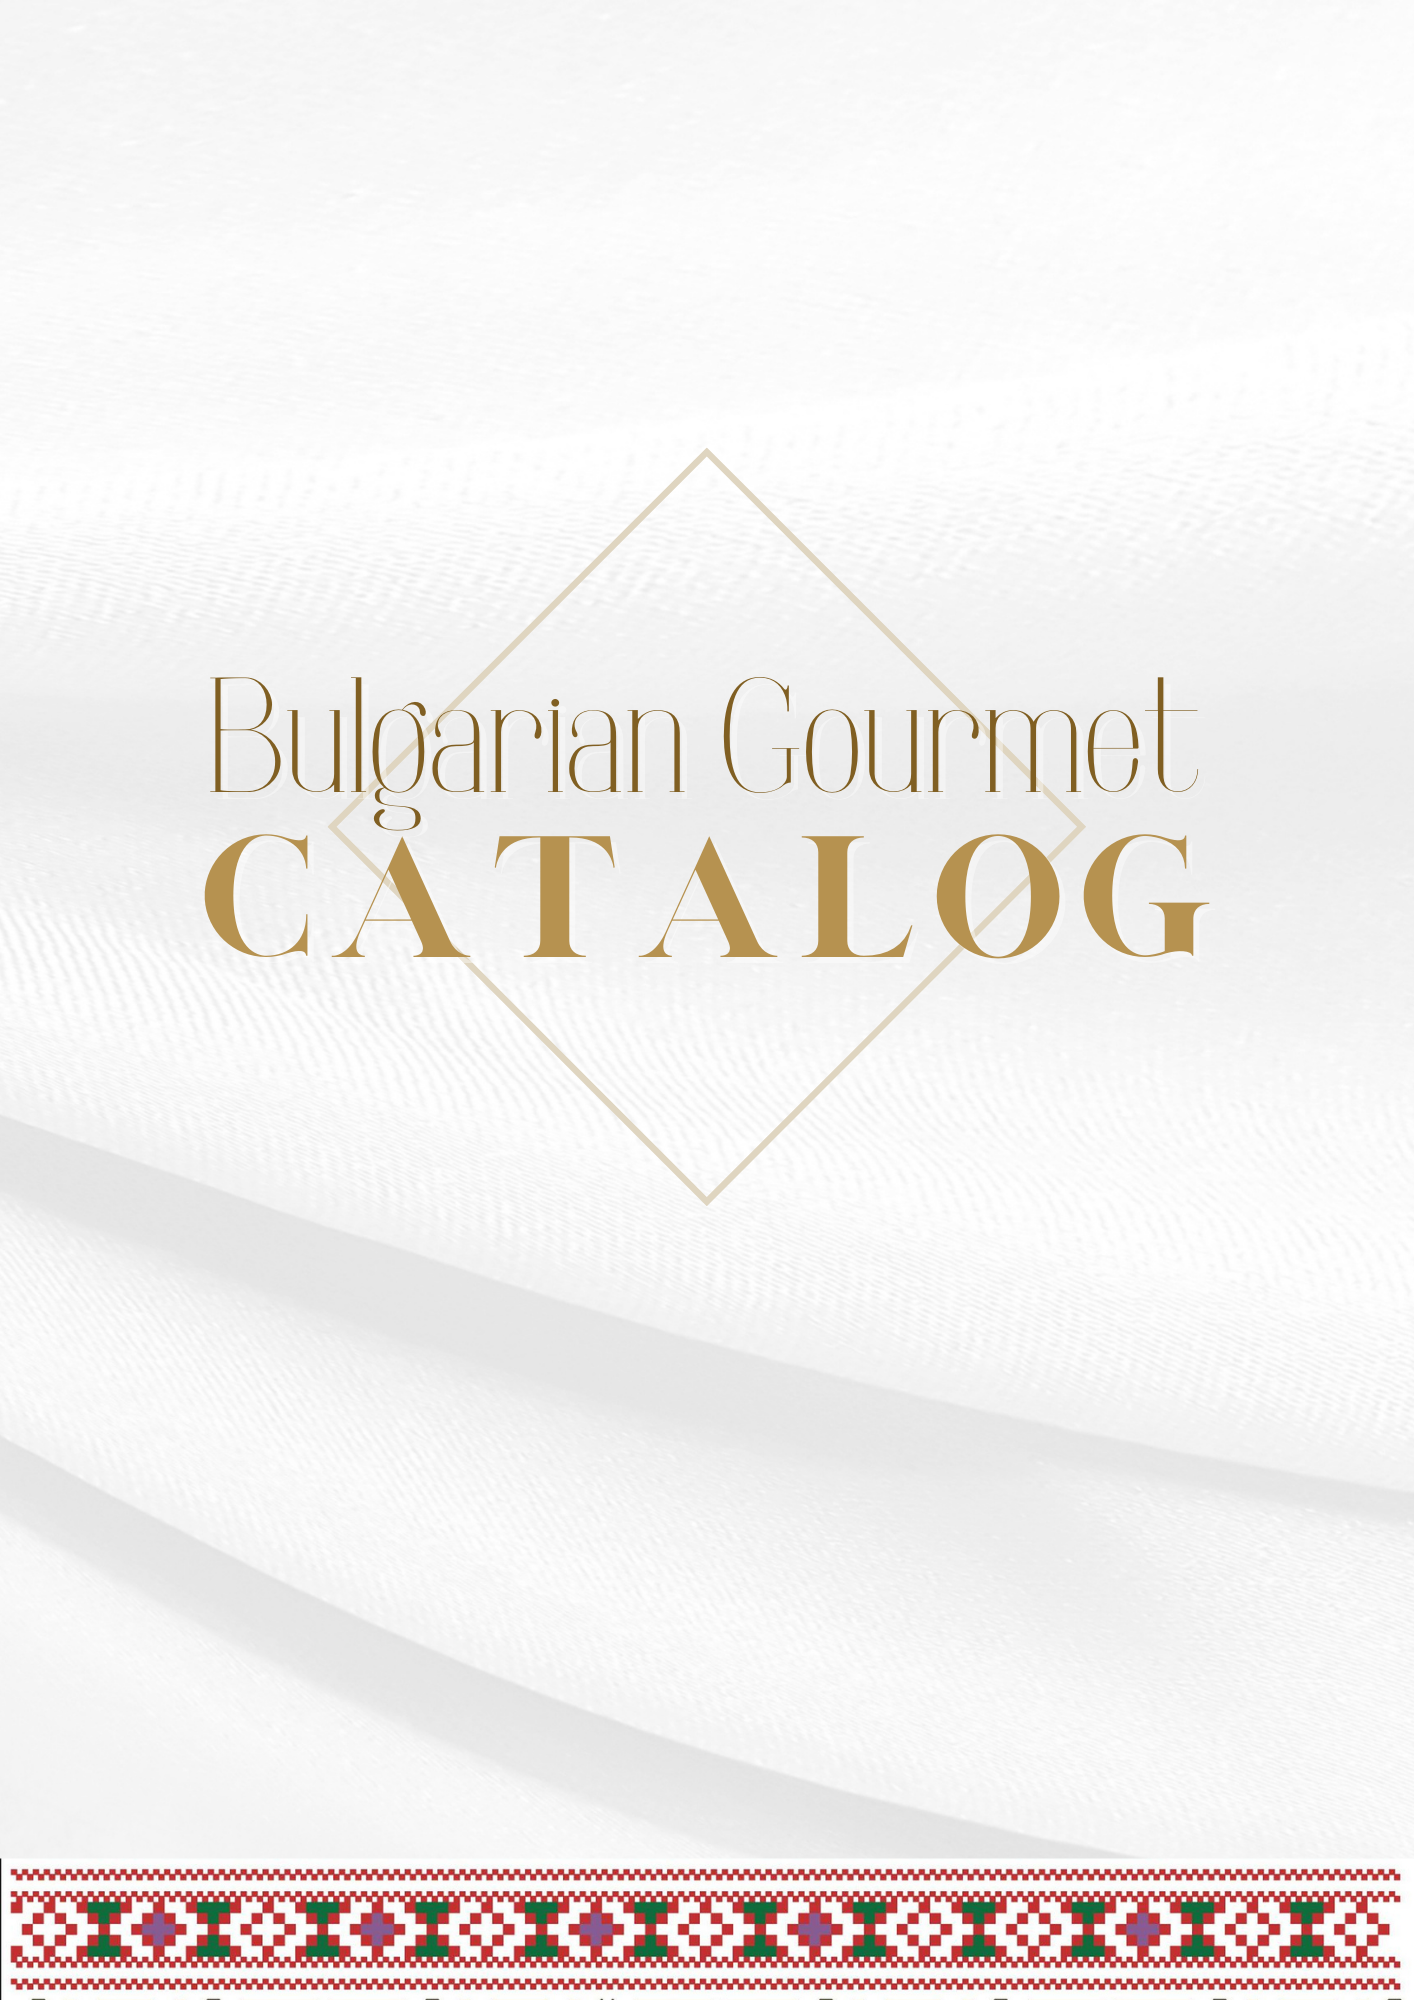 Bulgarian Gourmet Catalog Cover 1